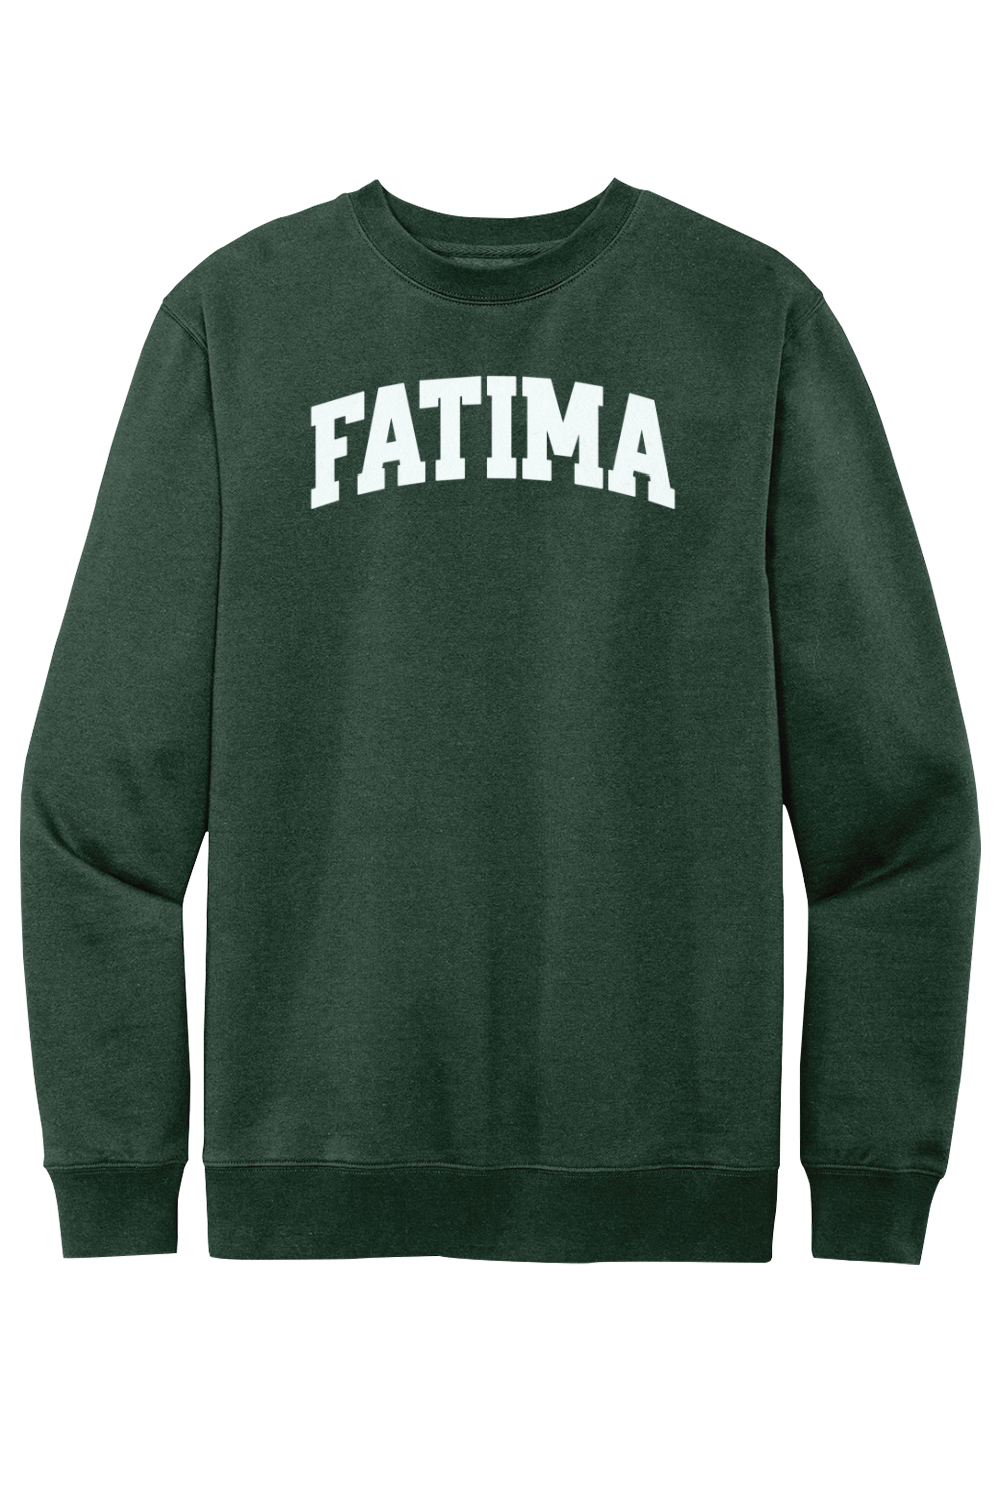 Fatima - Collegiate - Crewneck Sweatshirt